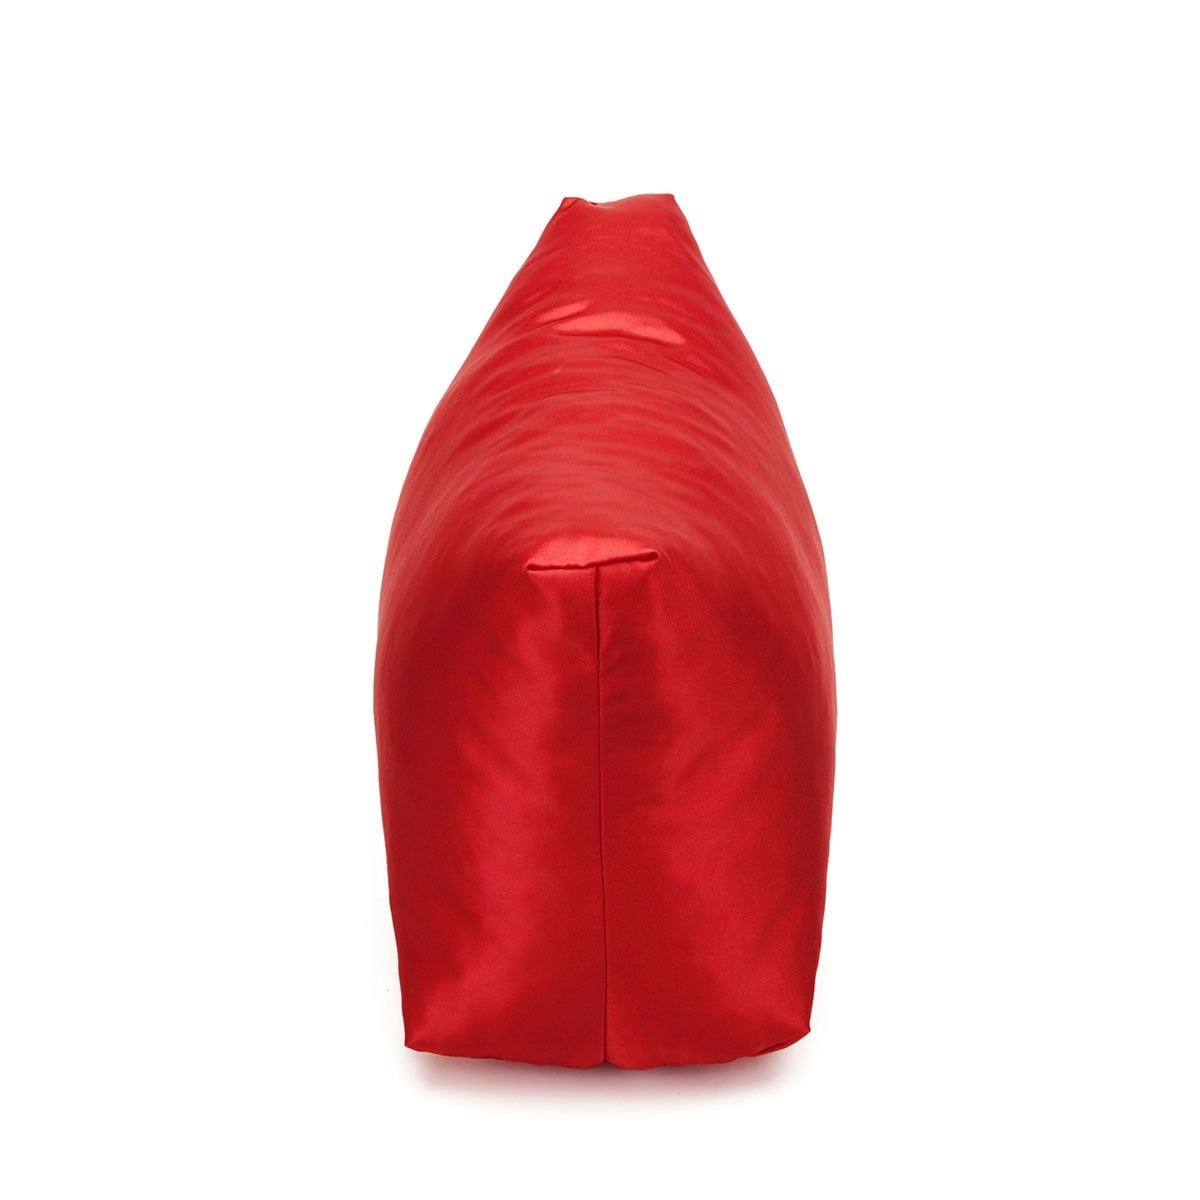 Satin Purse Storage Pillow for Carmel Bags Bag Shaper Pillow 